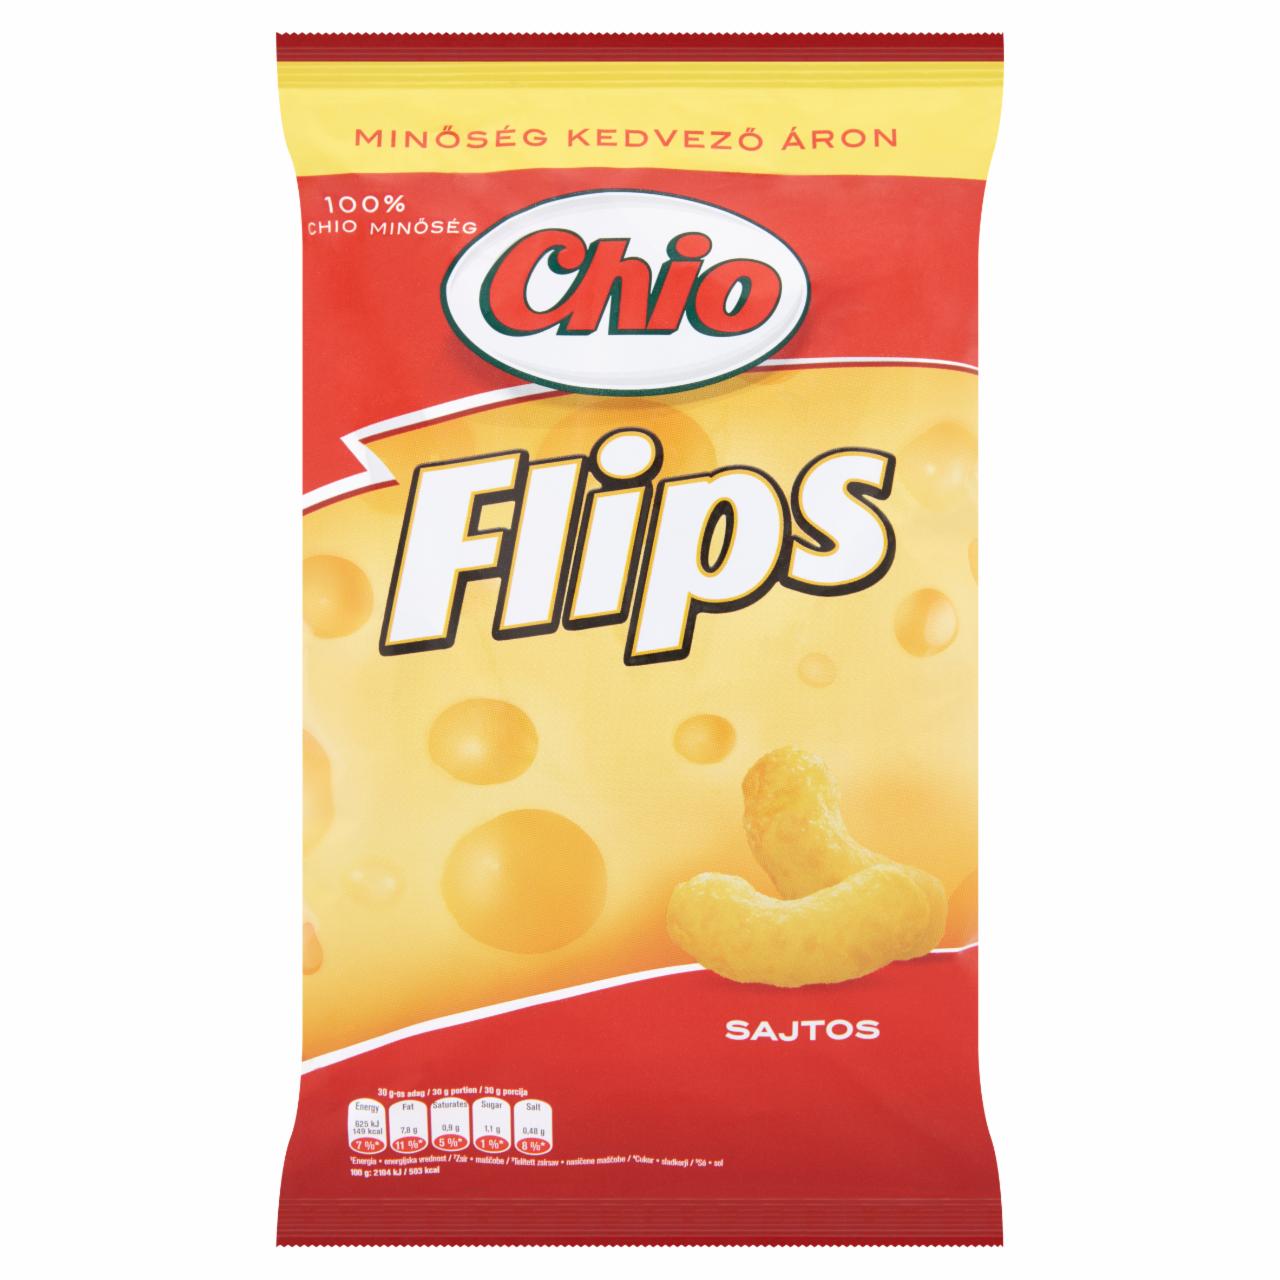 Képek - Chio Flips sajtos kukoricasnack 55 g